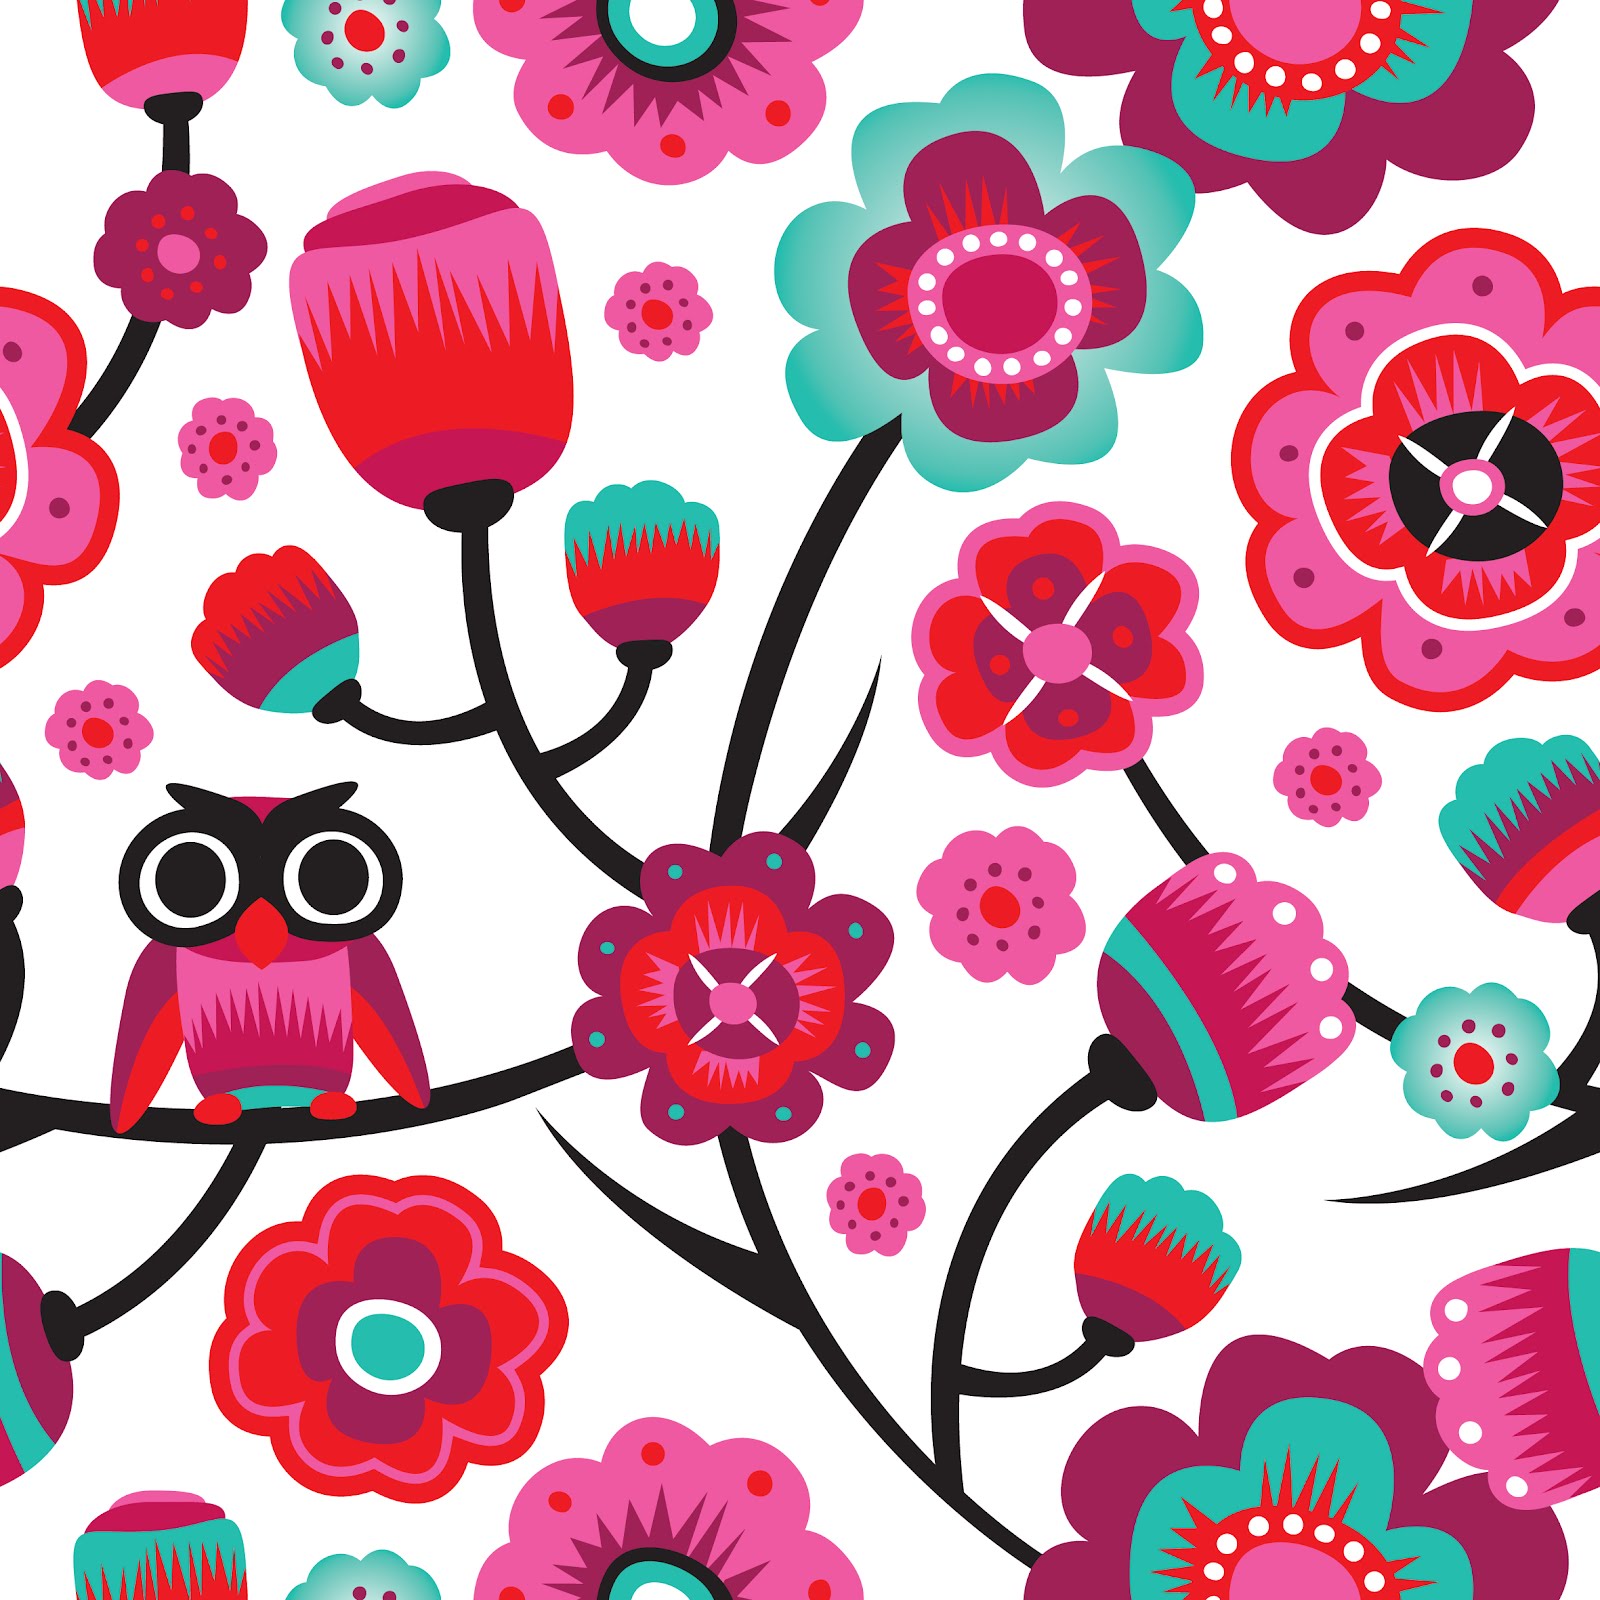 Free download Cute Owl Design Wallpaper Cute new owl pattern design